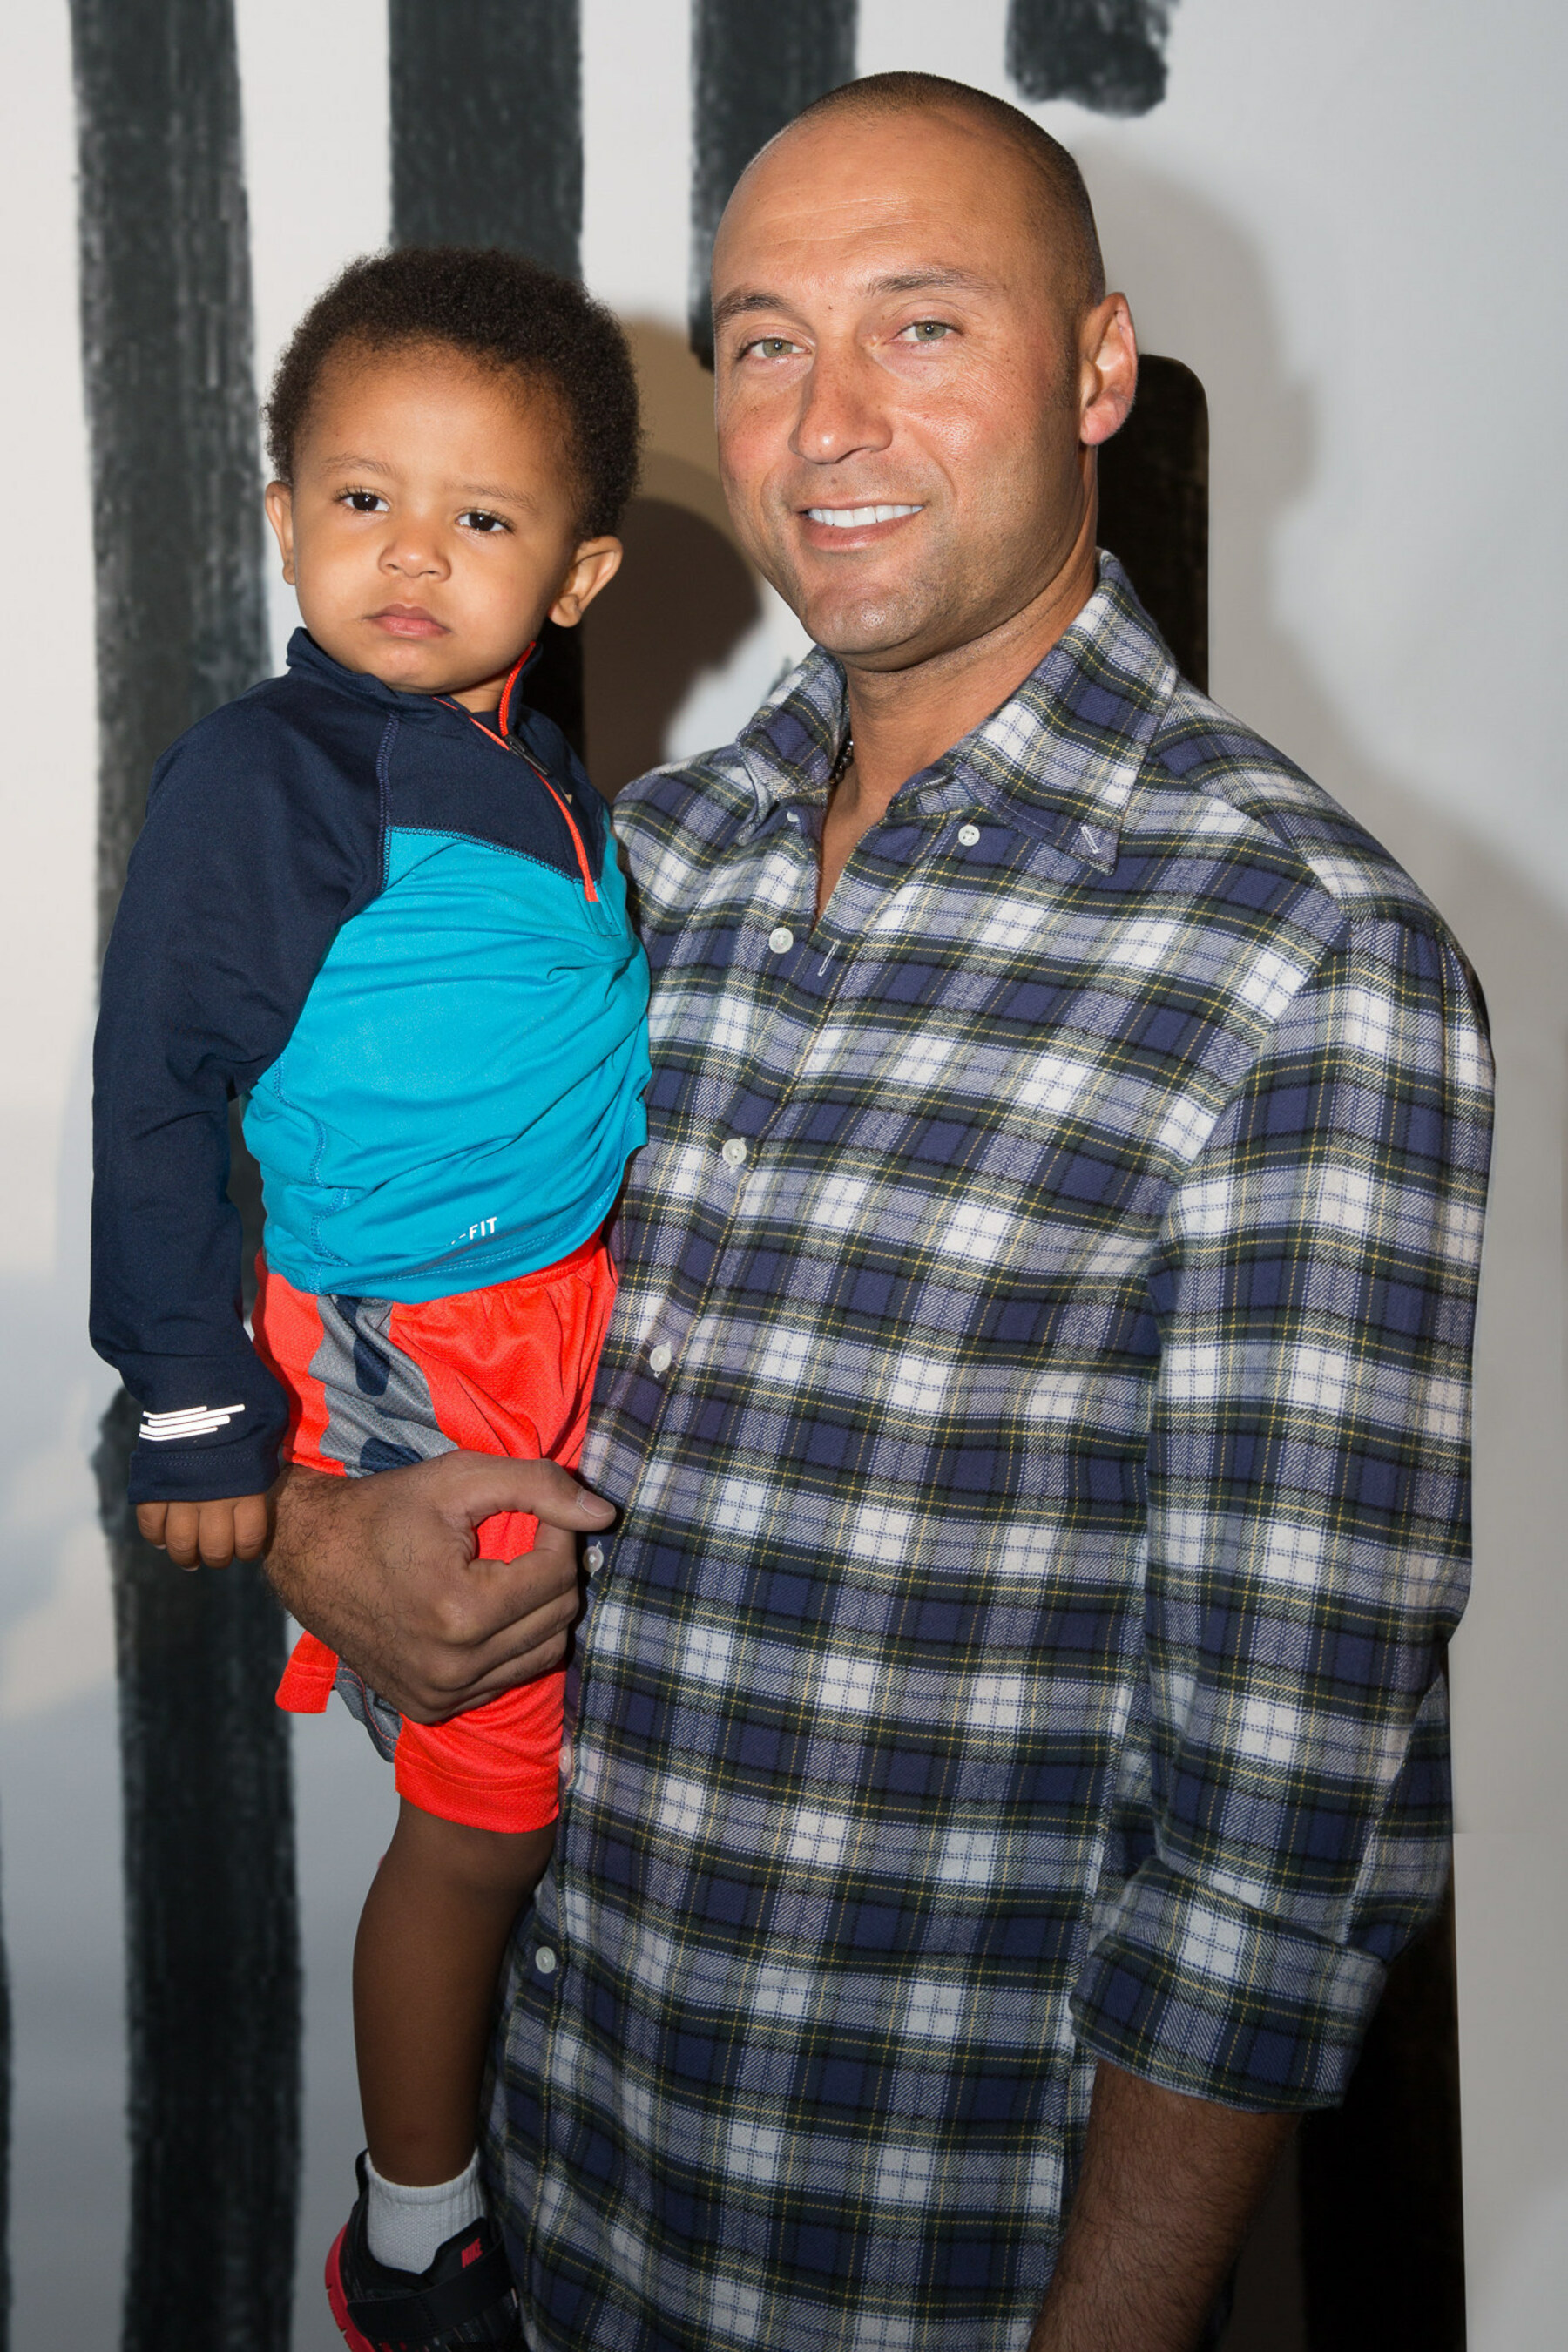 Derek Jeter and his nephew at the Kids Rock! Fashion Show (PRNewsFoto/Haddad Brands)